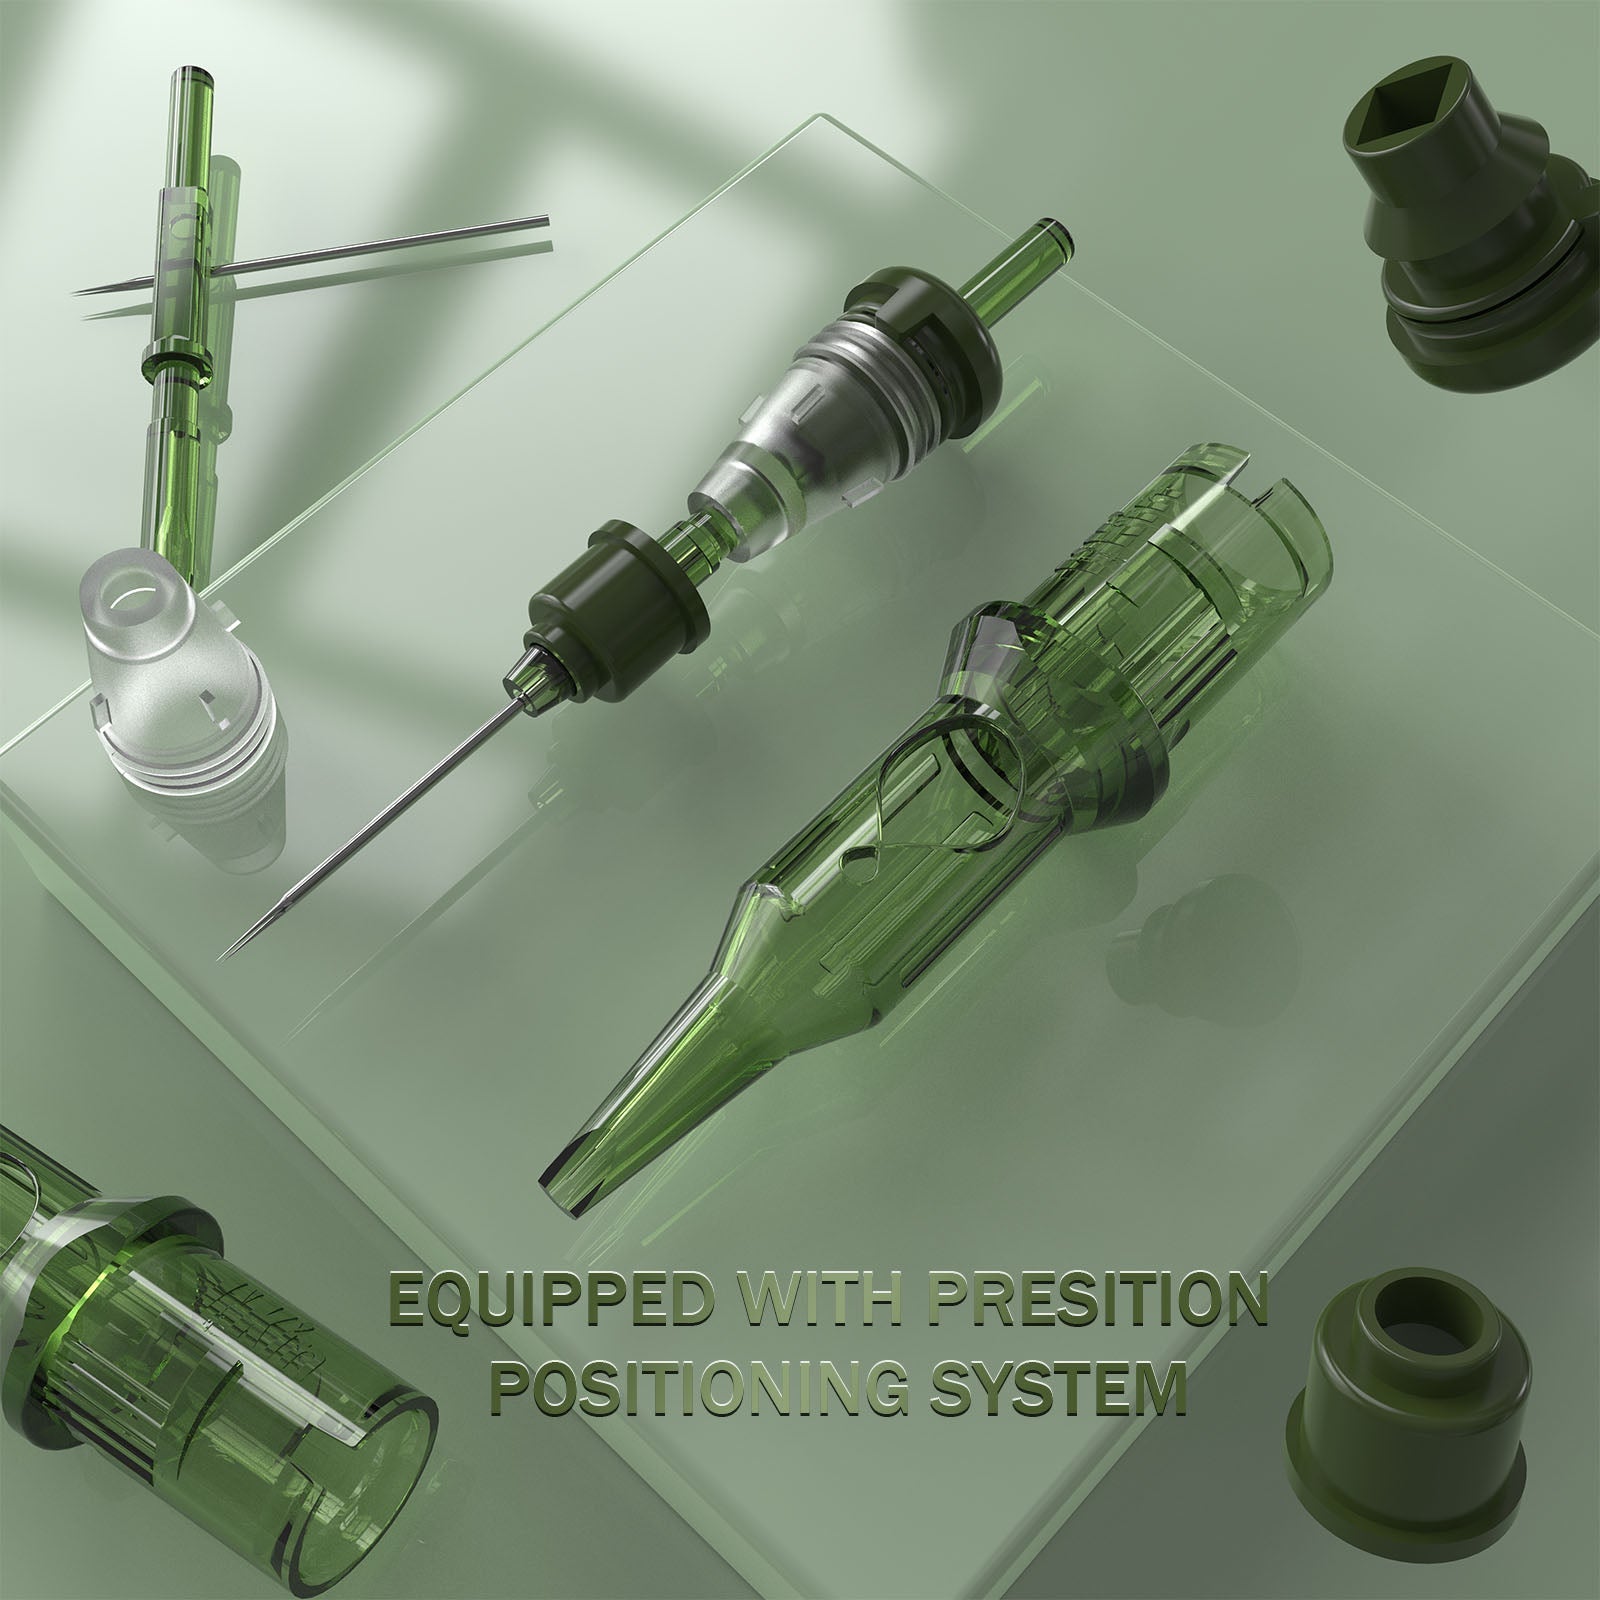 EZ Revoltion cartridge kit (50pcs) – EZ TATTOO SUPPLY